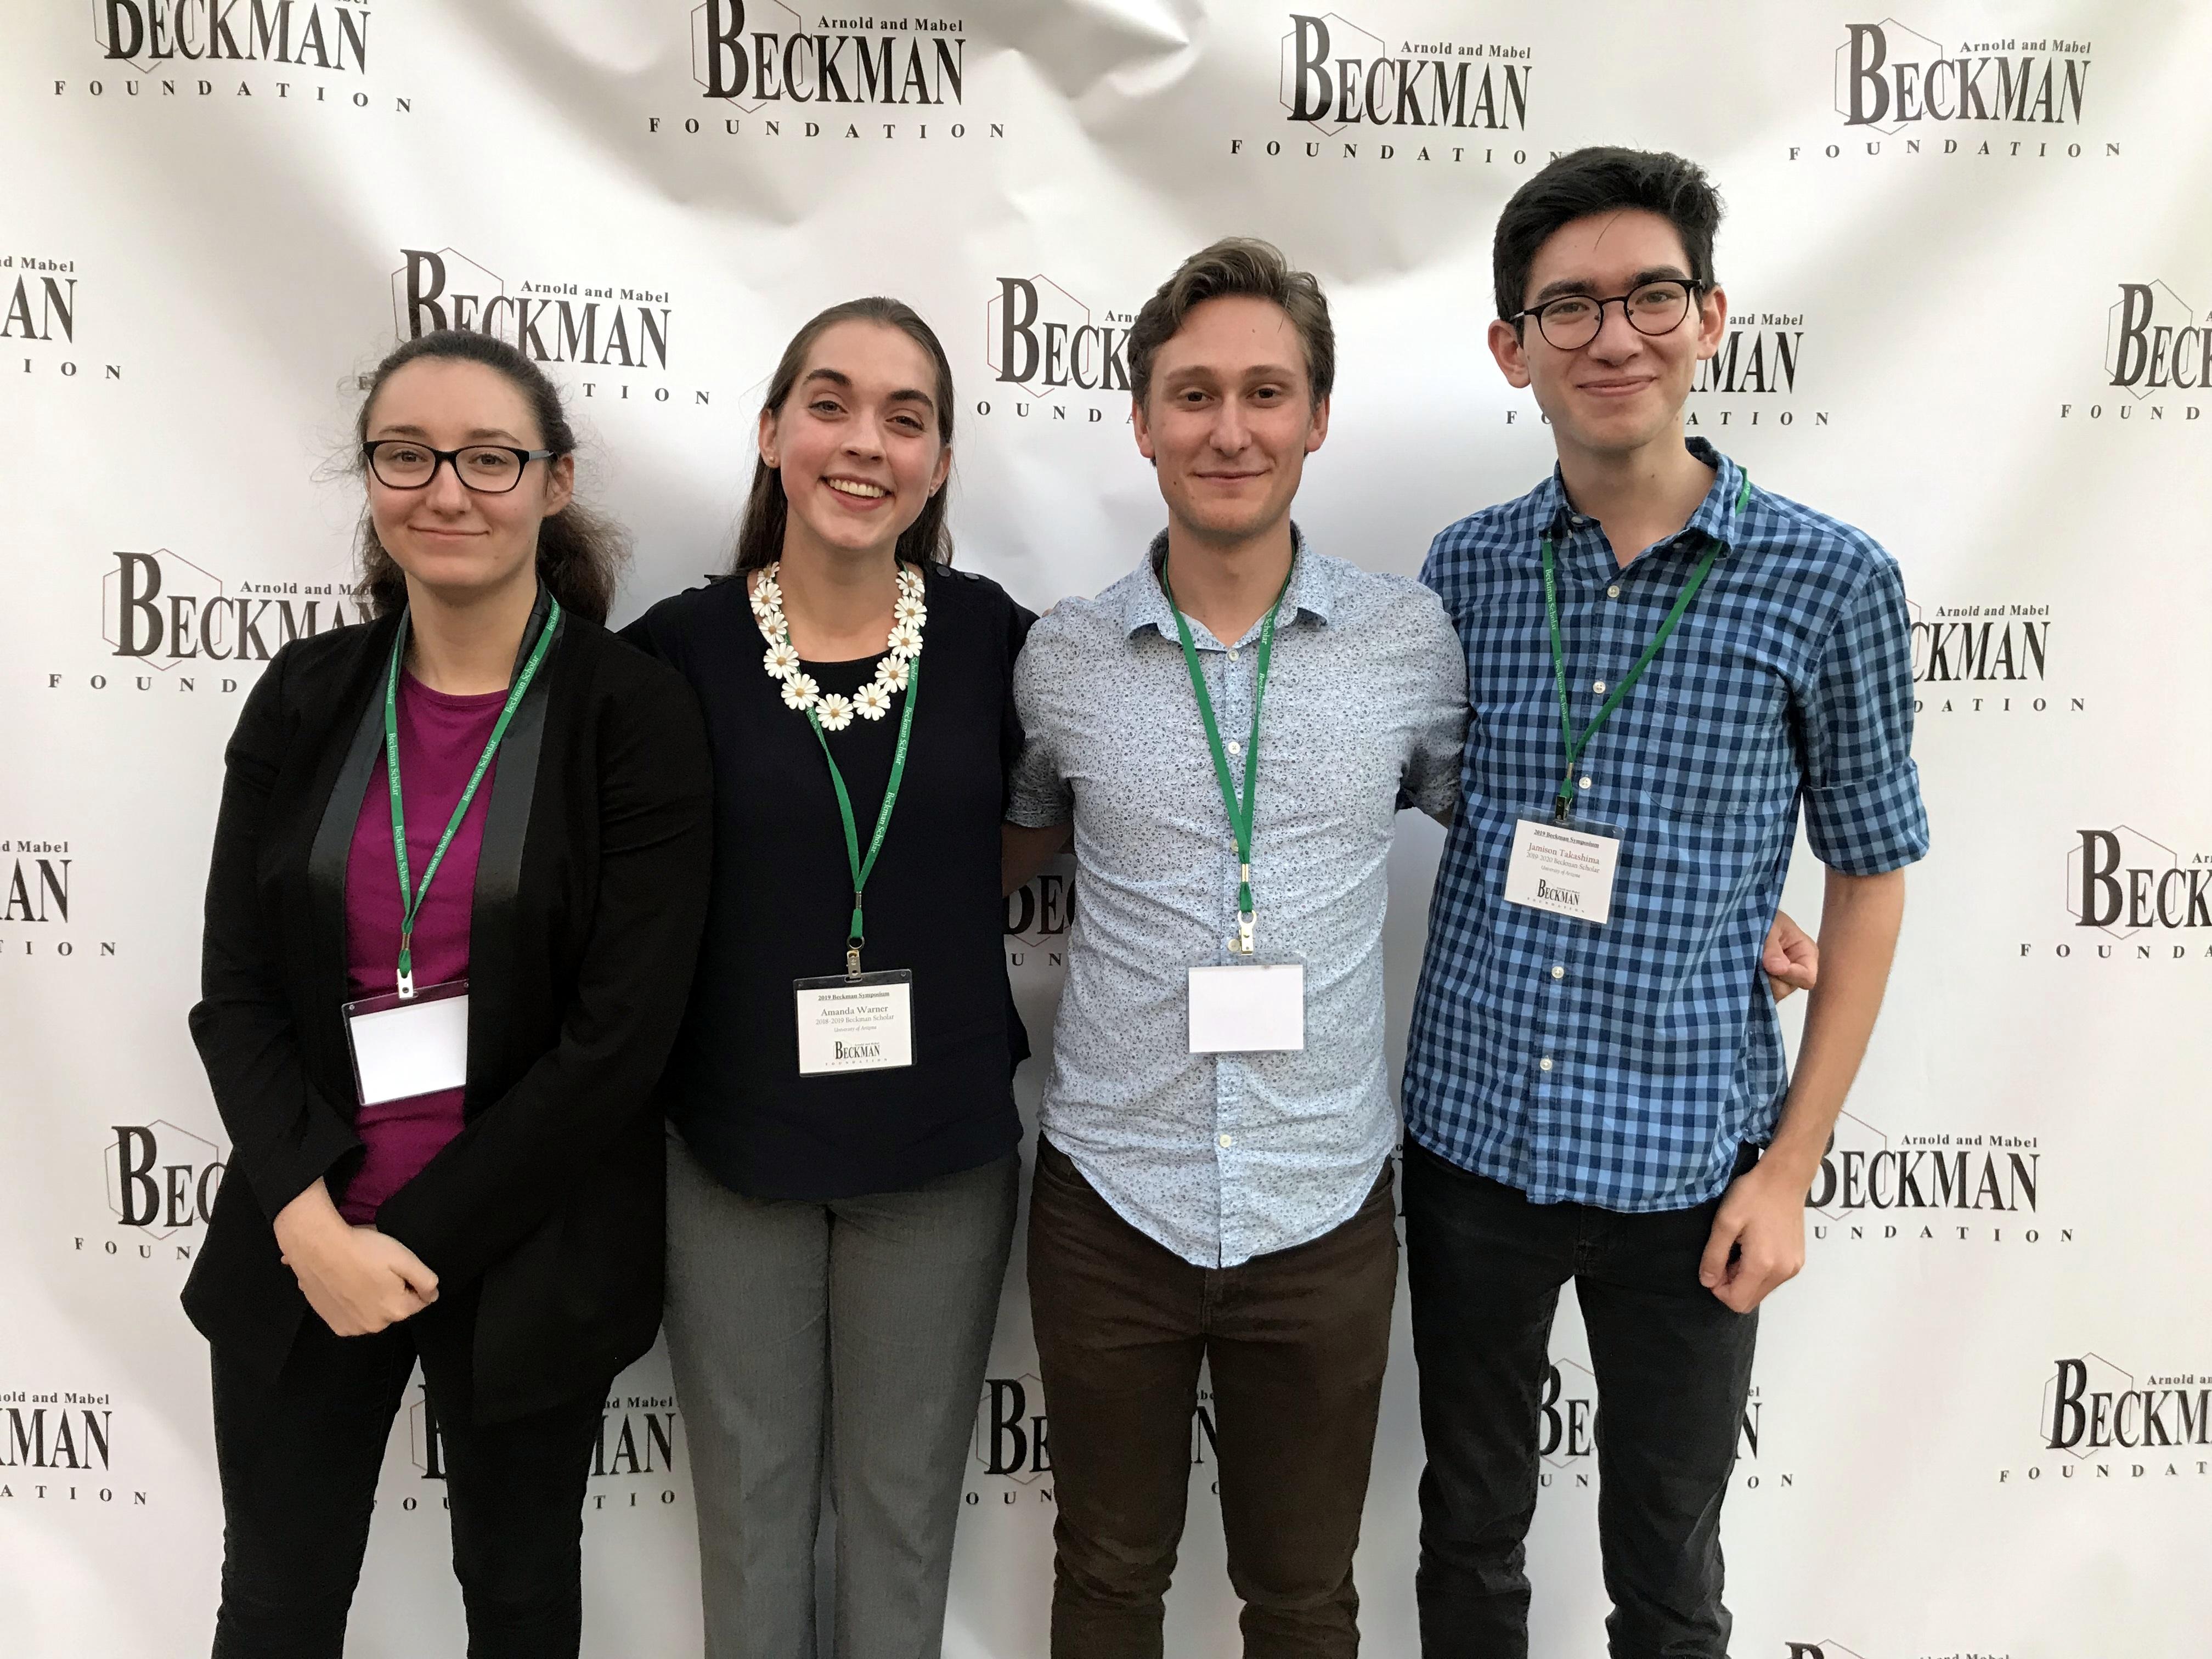 UArizona's last four Beckman Scholars, Catherine Weibel, Amanda Warner, Randall Eck, and Jamie Takashima